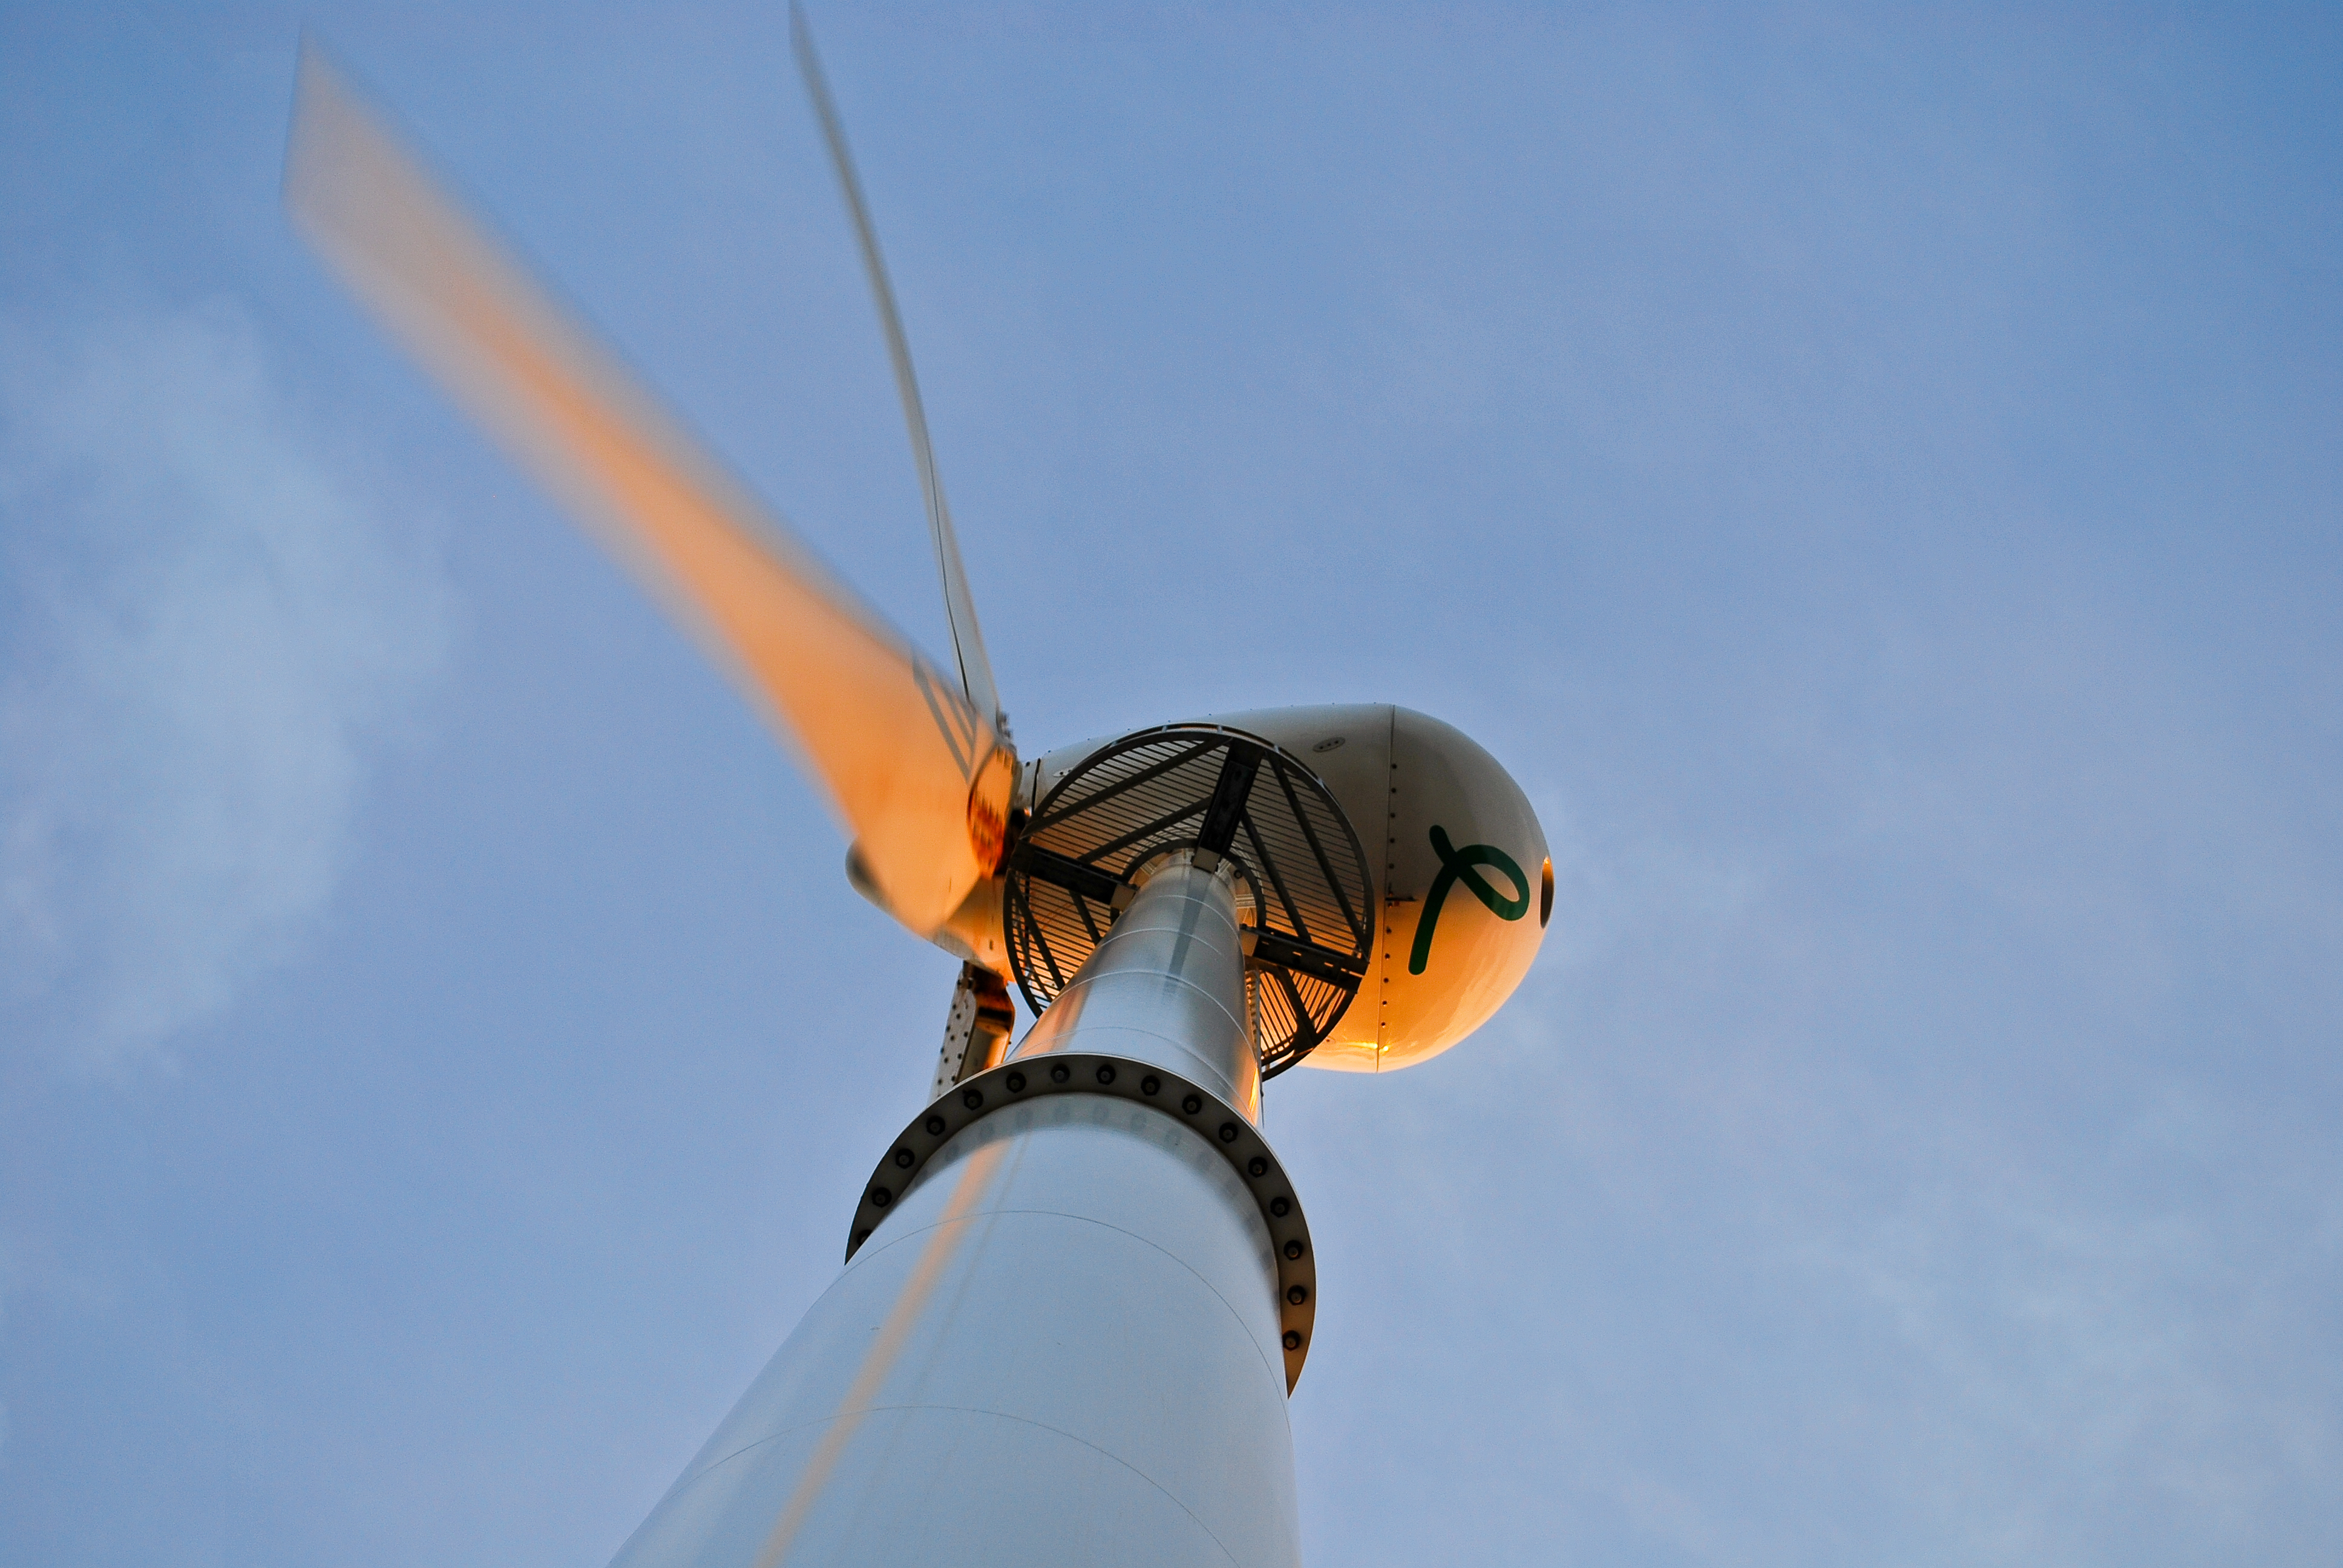 Endurance E3120 50kW Wind Turbine | Sustainable Energy Specialists